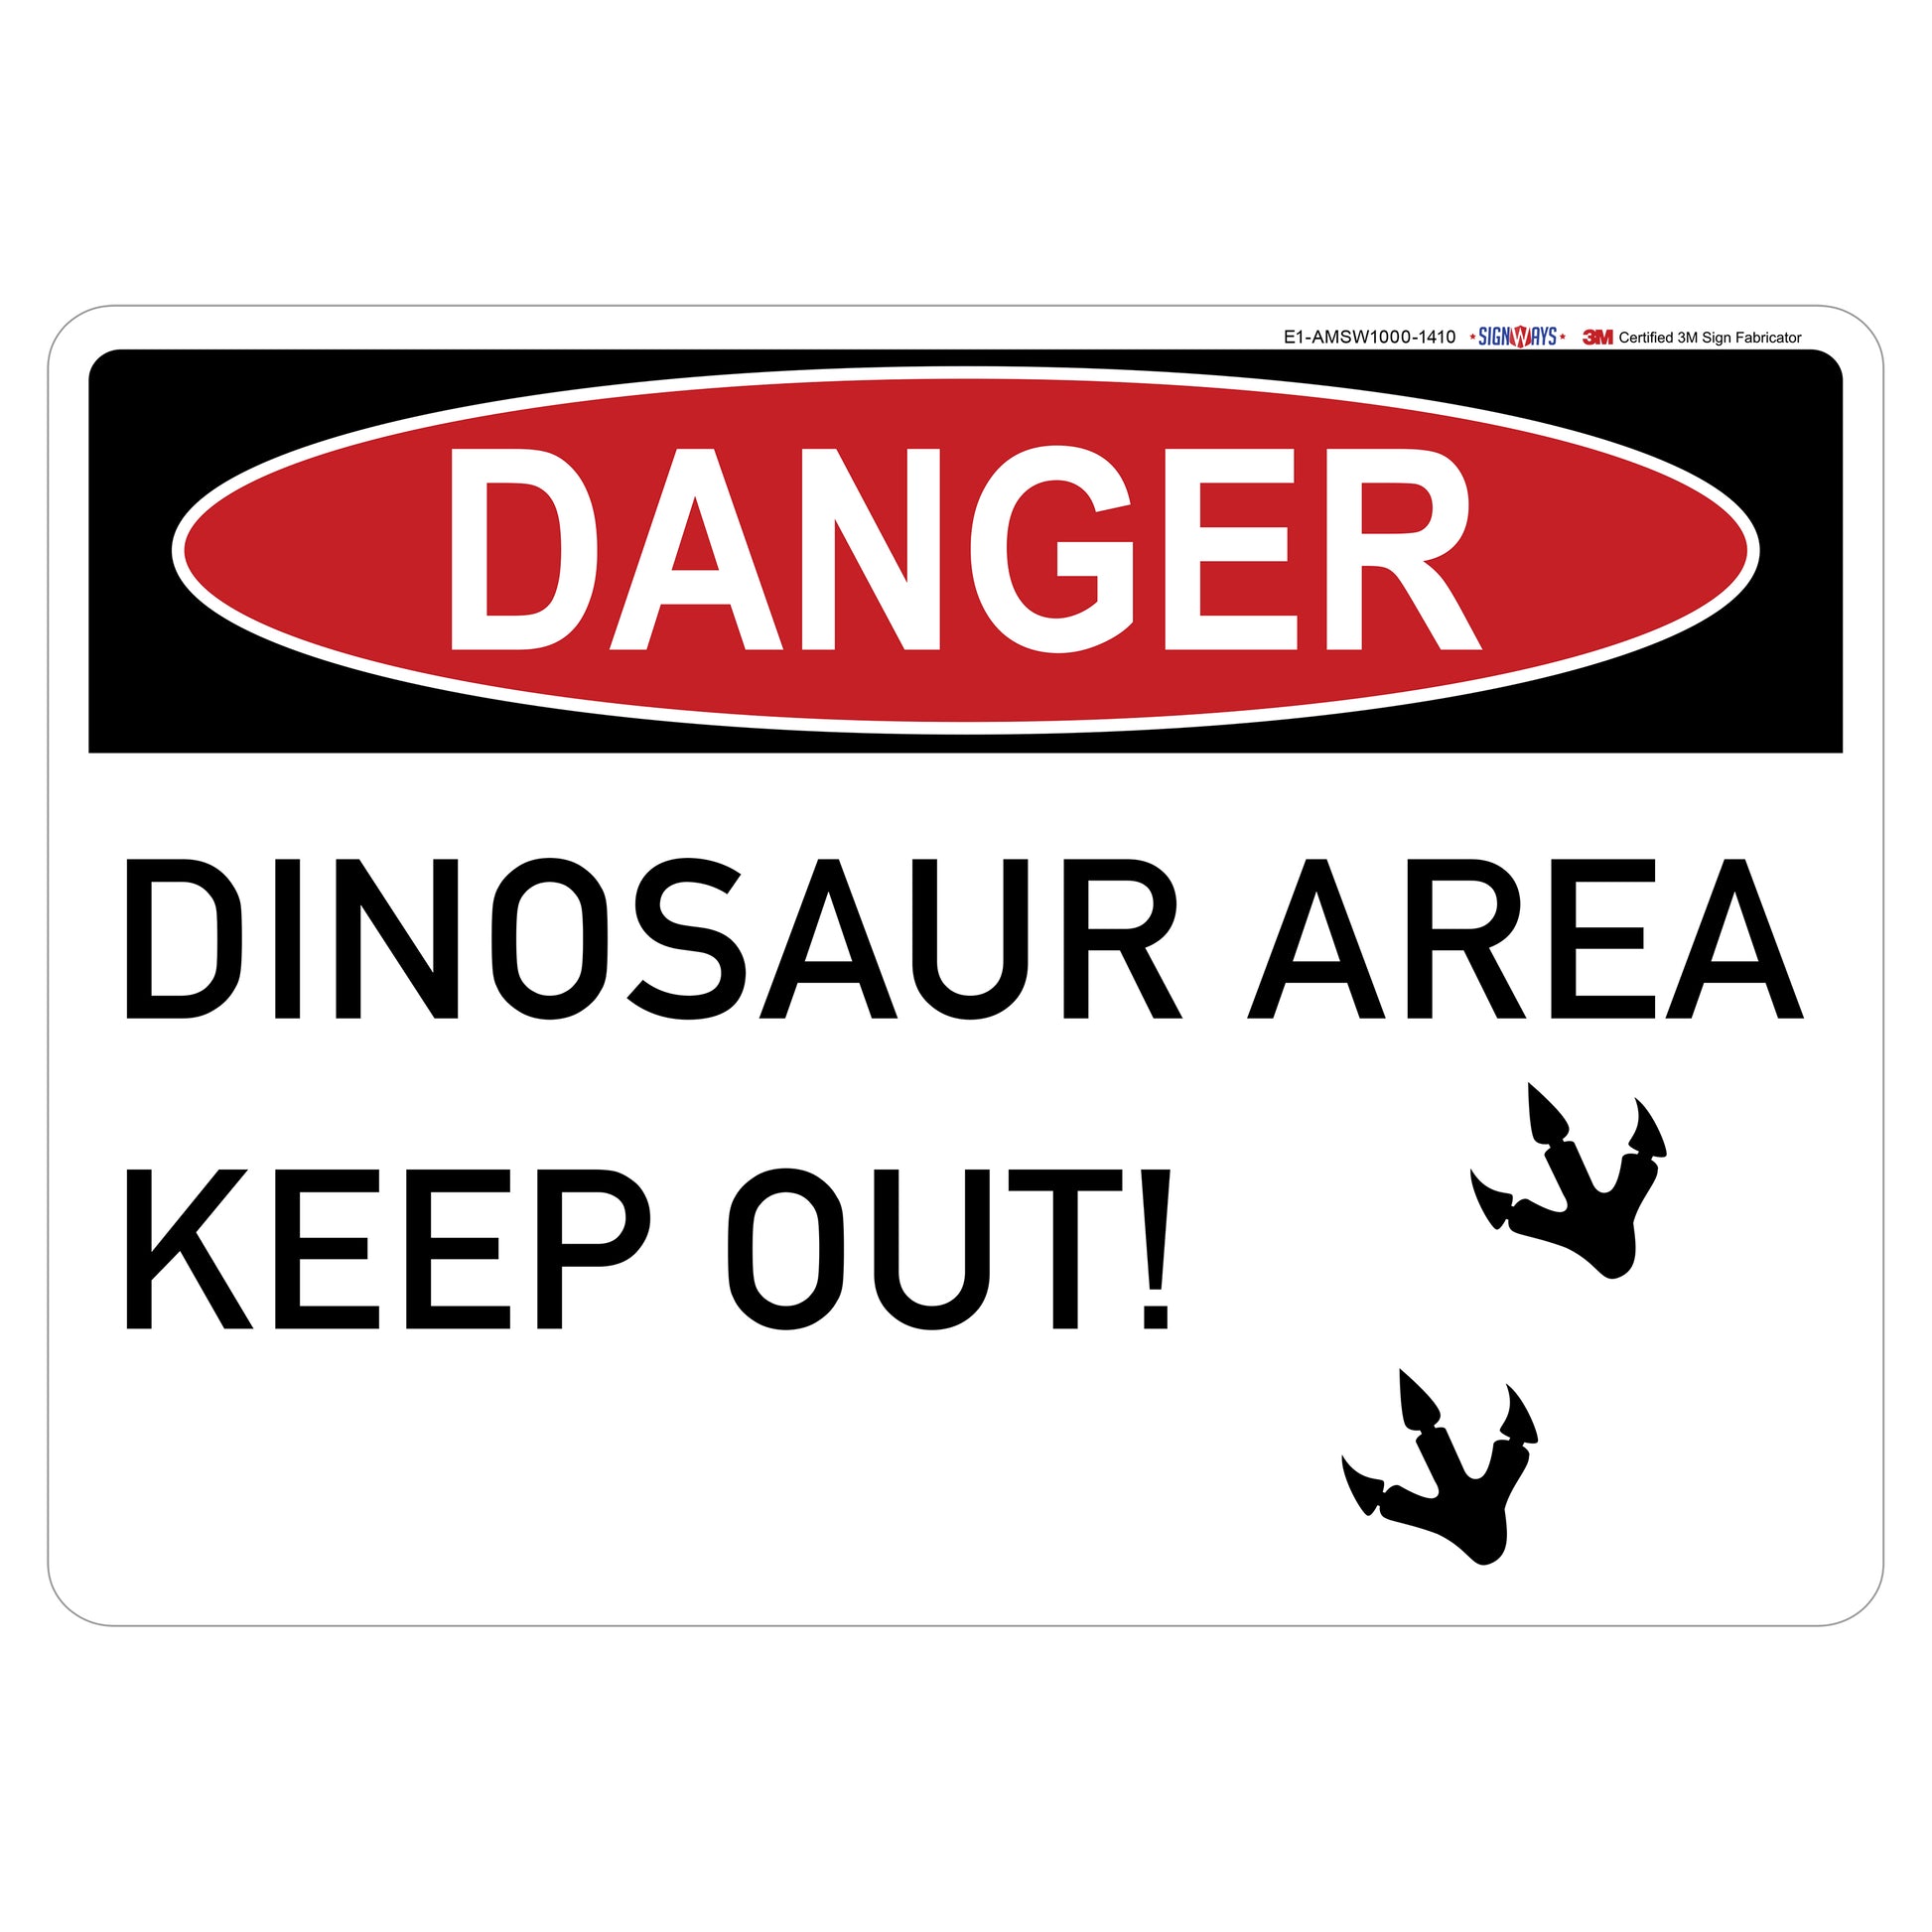 Danger Dinosaur Area Keep Out sign